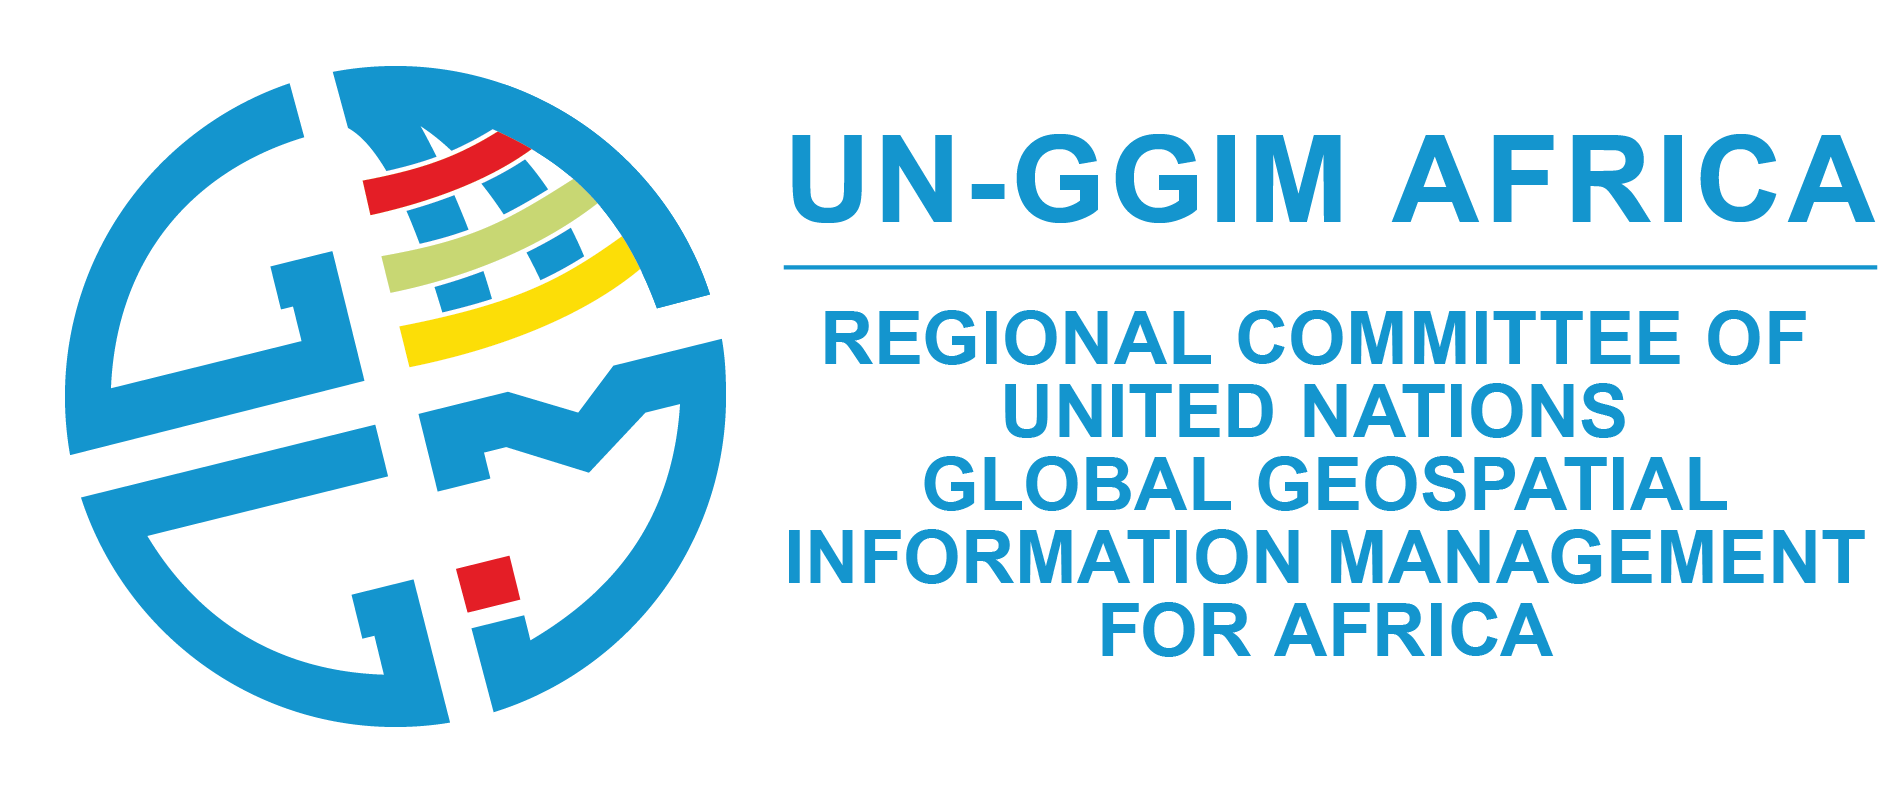 UN-GGIM-Africa